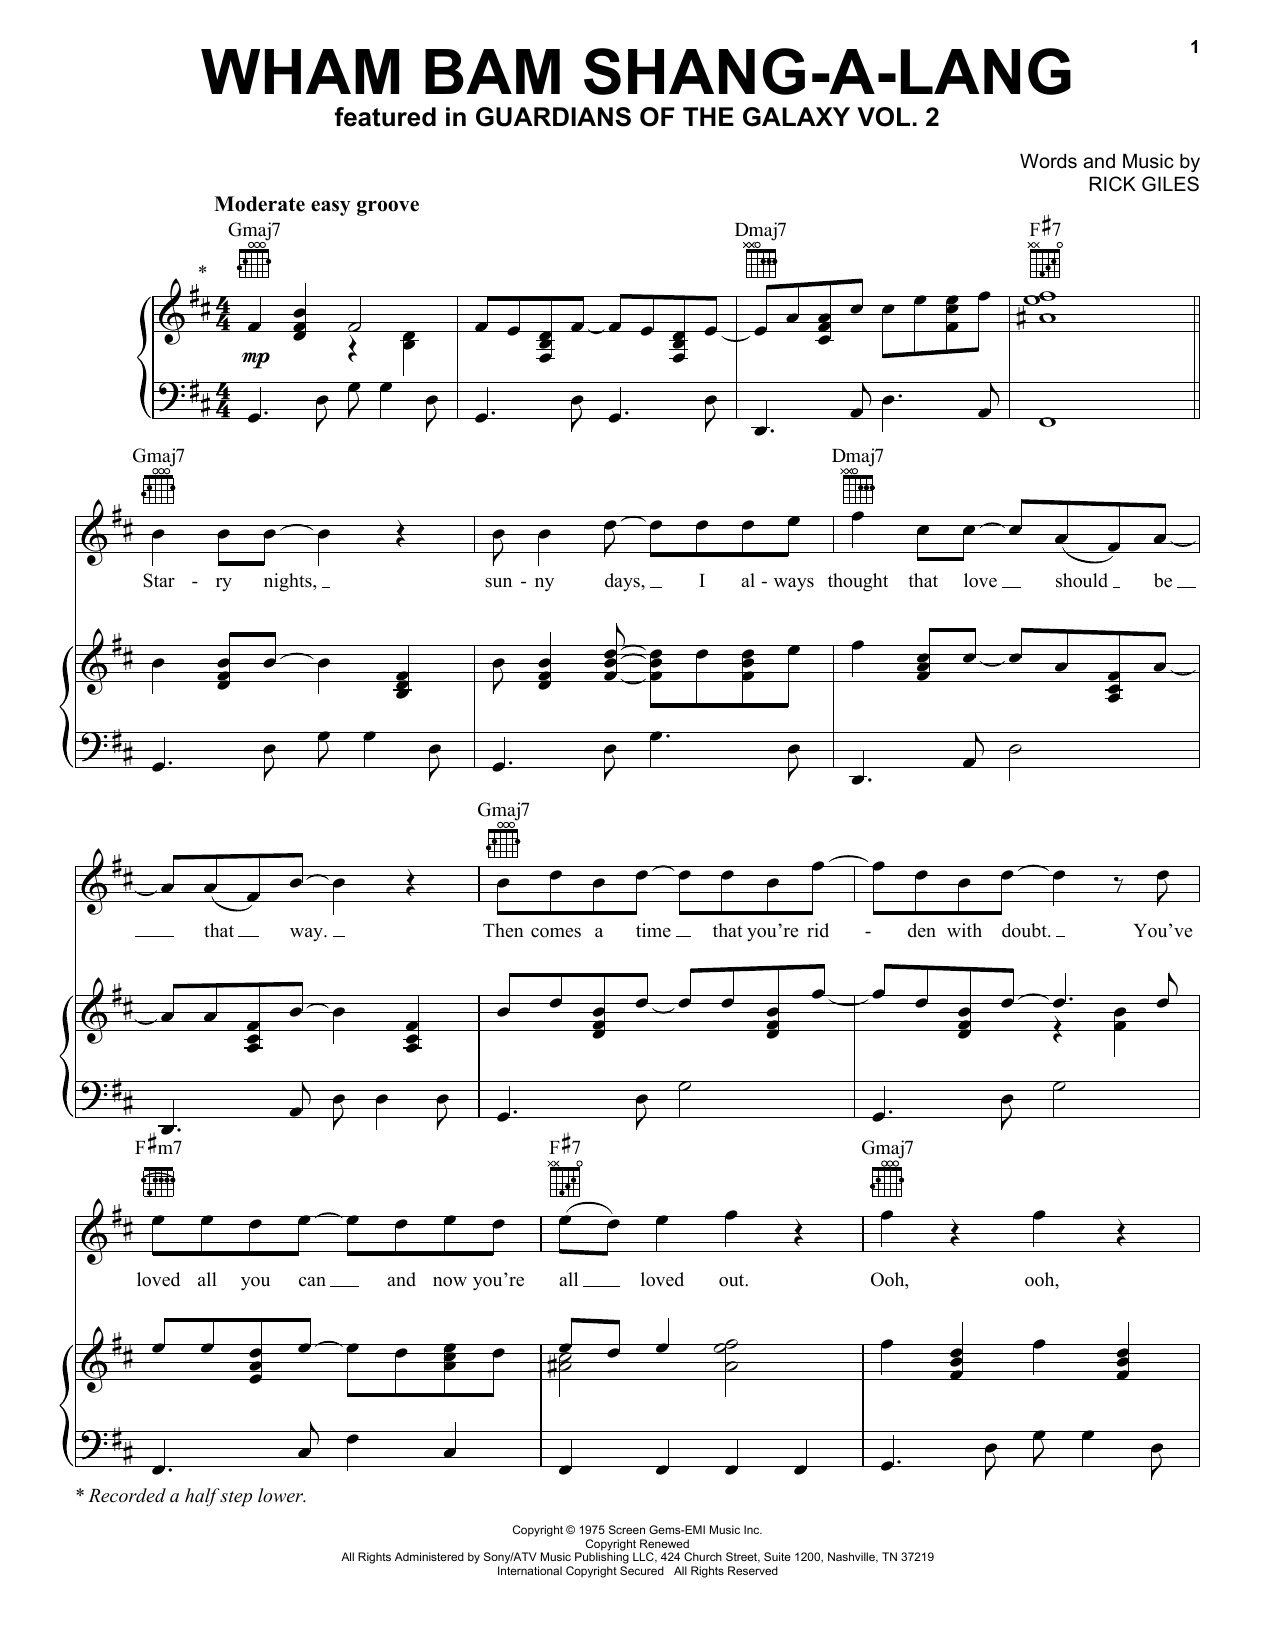 Rick Giles Wham Bam Shang-A-Lang Sheet Music Notes & Chords for Piano, Vocal & Guitar (Right-Hand Melody) - Download or Print PDF